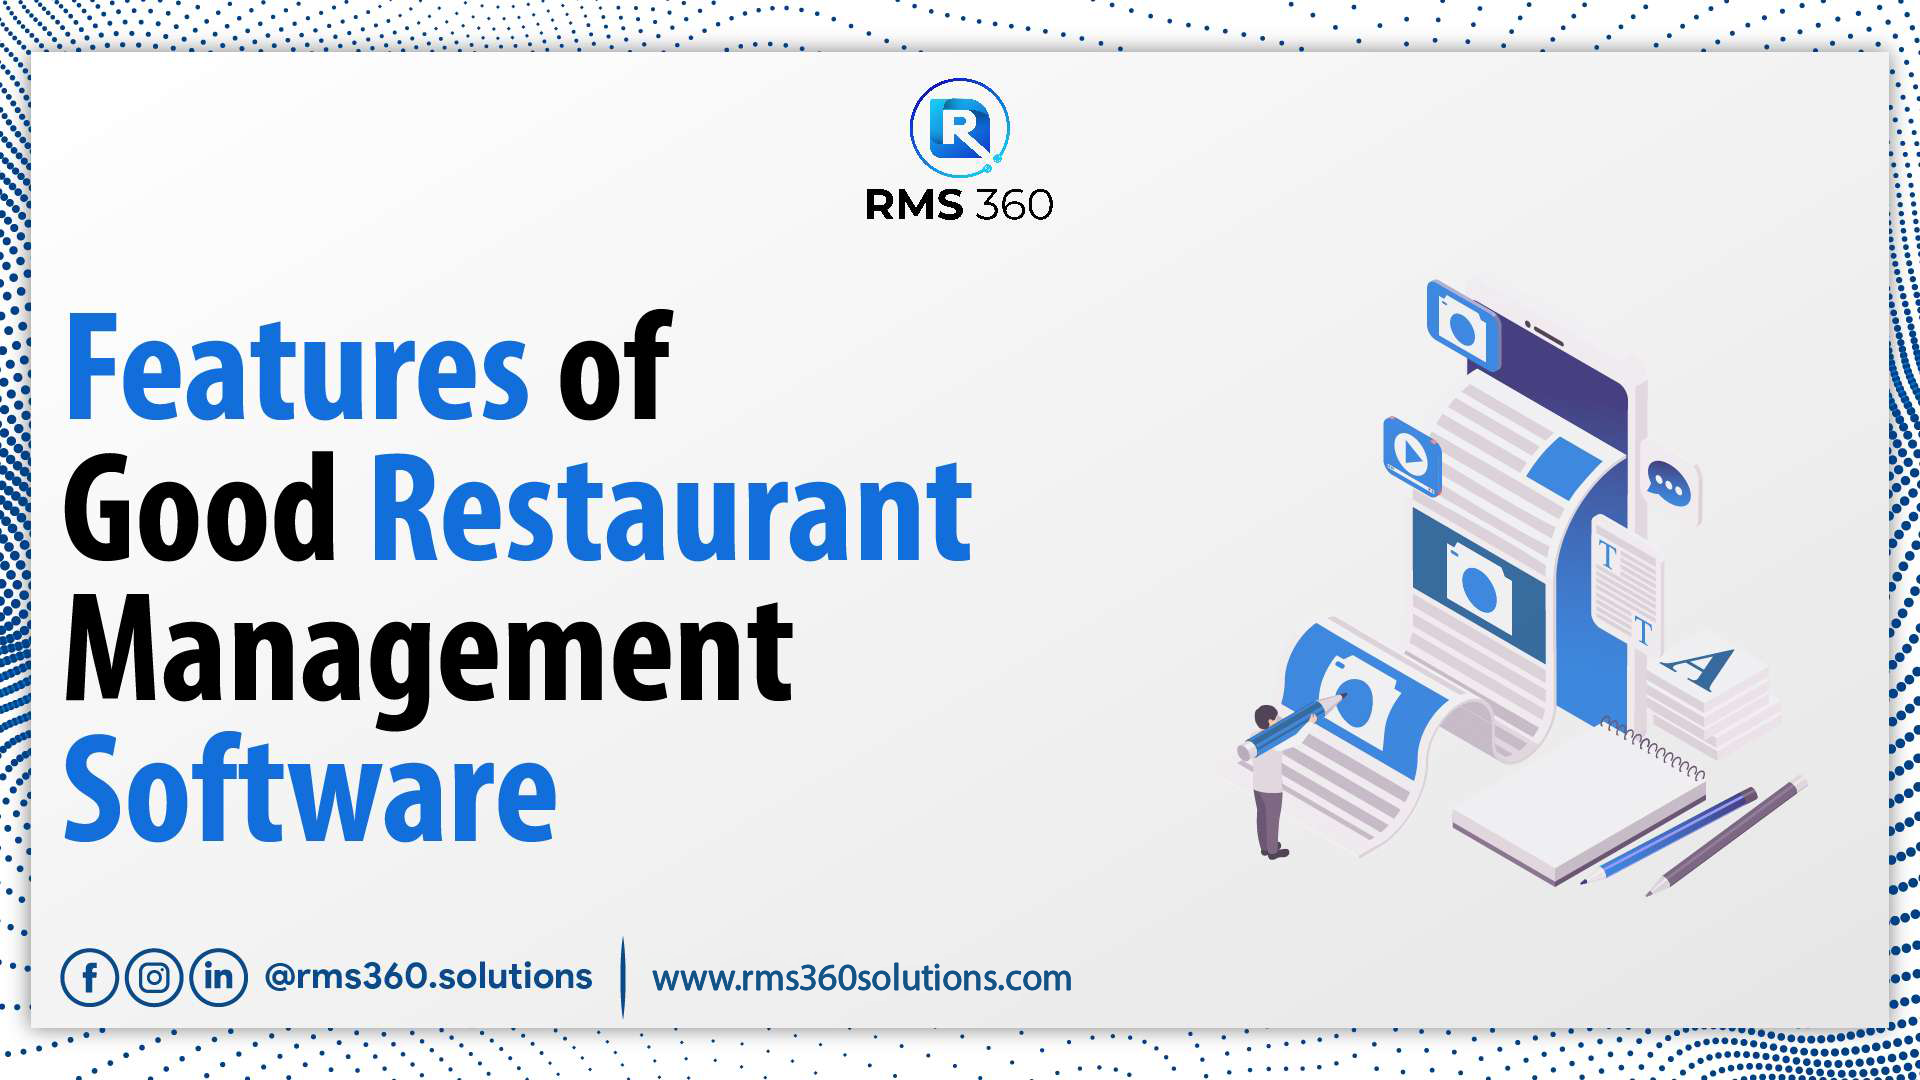 Features of Good Restaurant Management Software